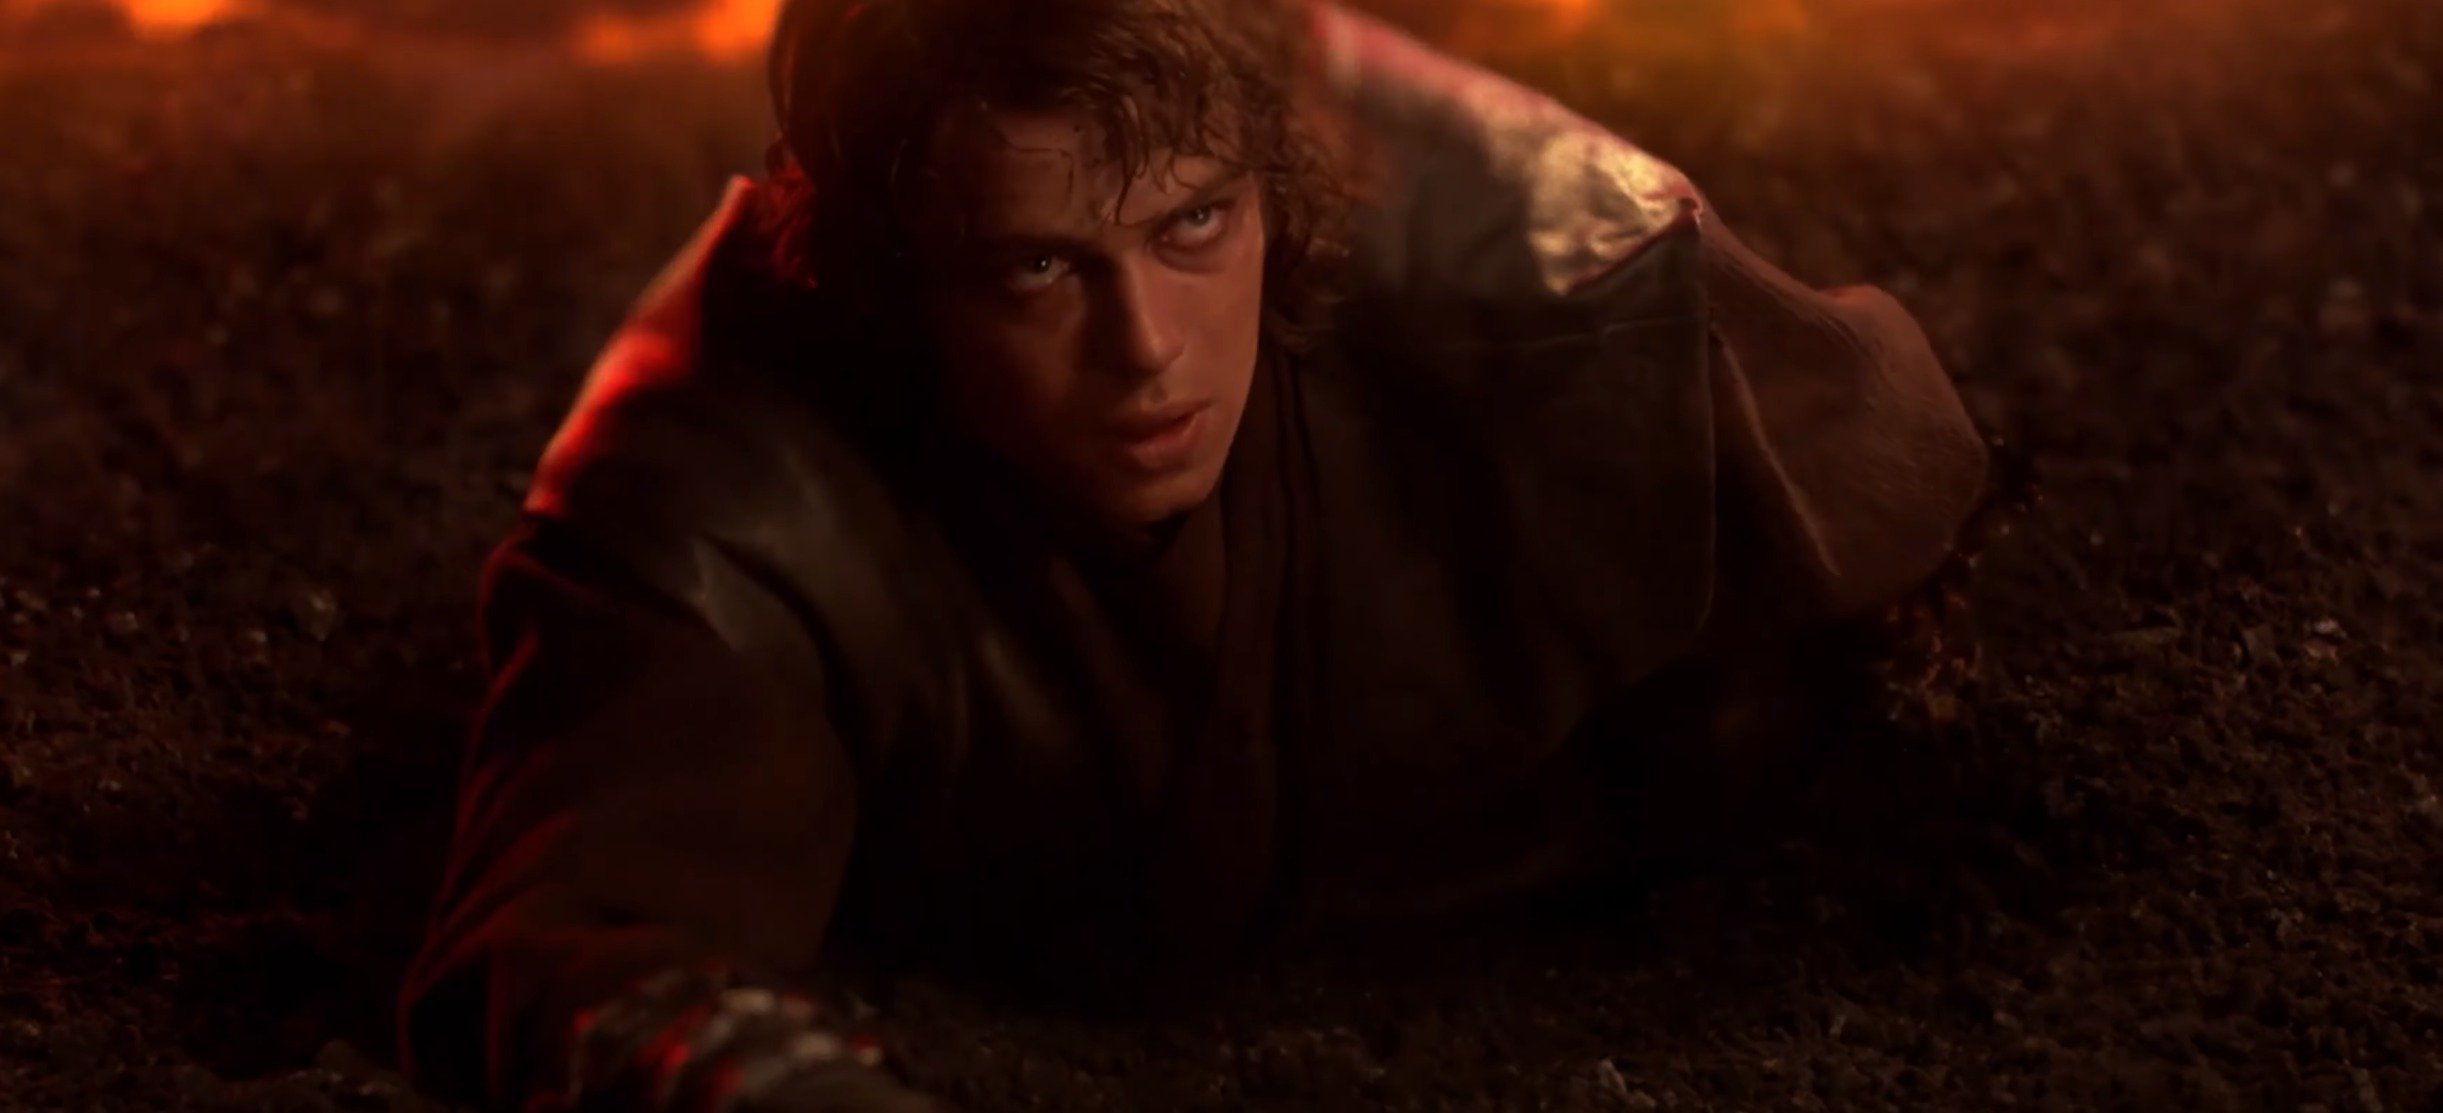 Hayden Christensen - Star Wars, épisode III : La Revanche des Sith ©Lucasfilm Ltd.